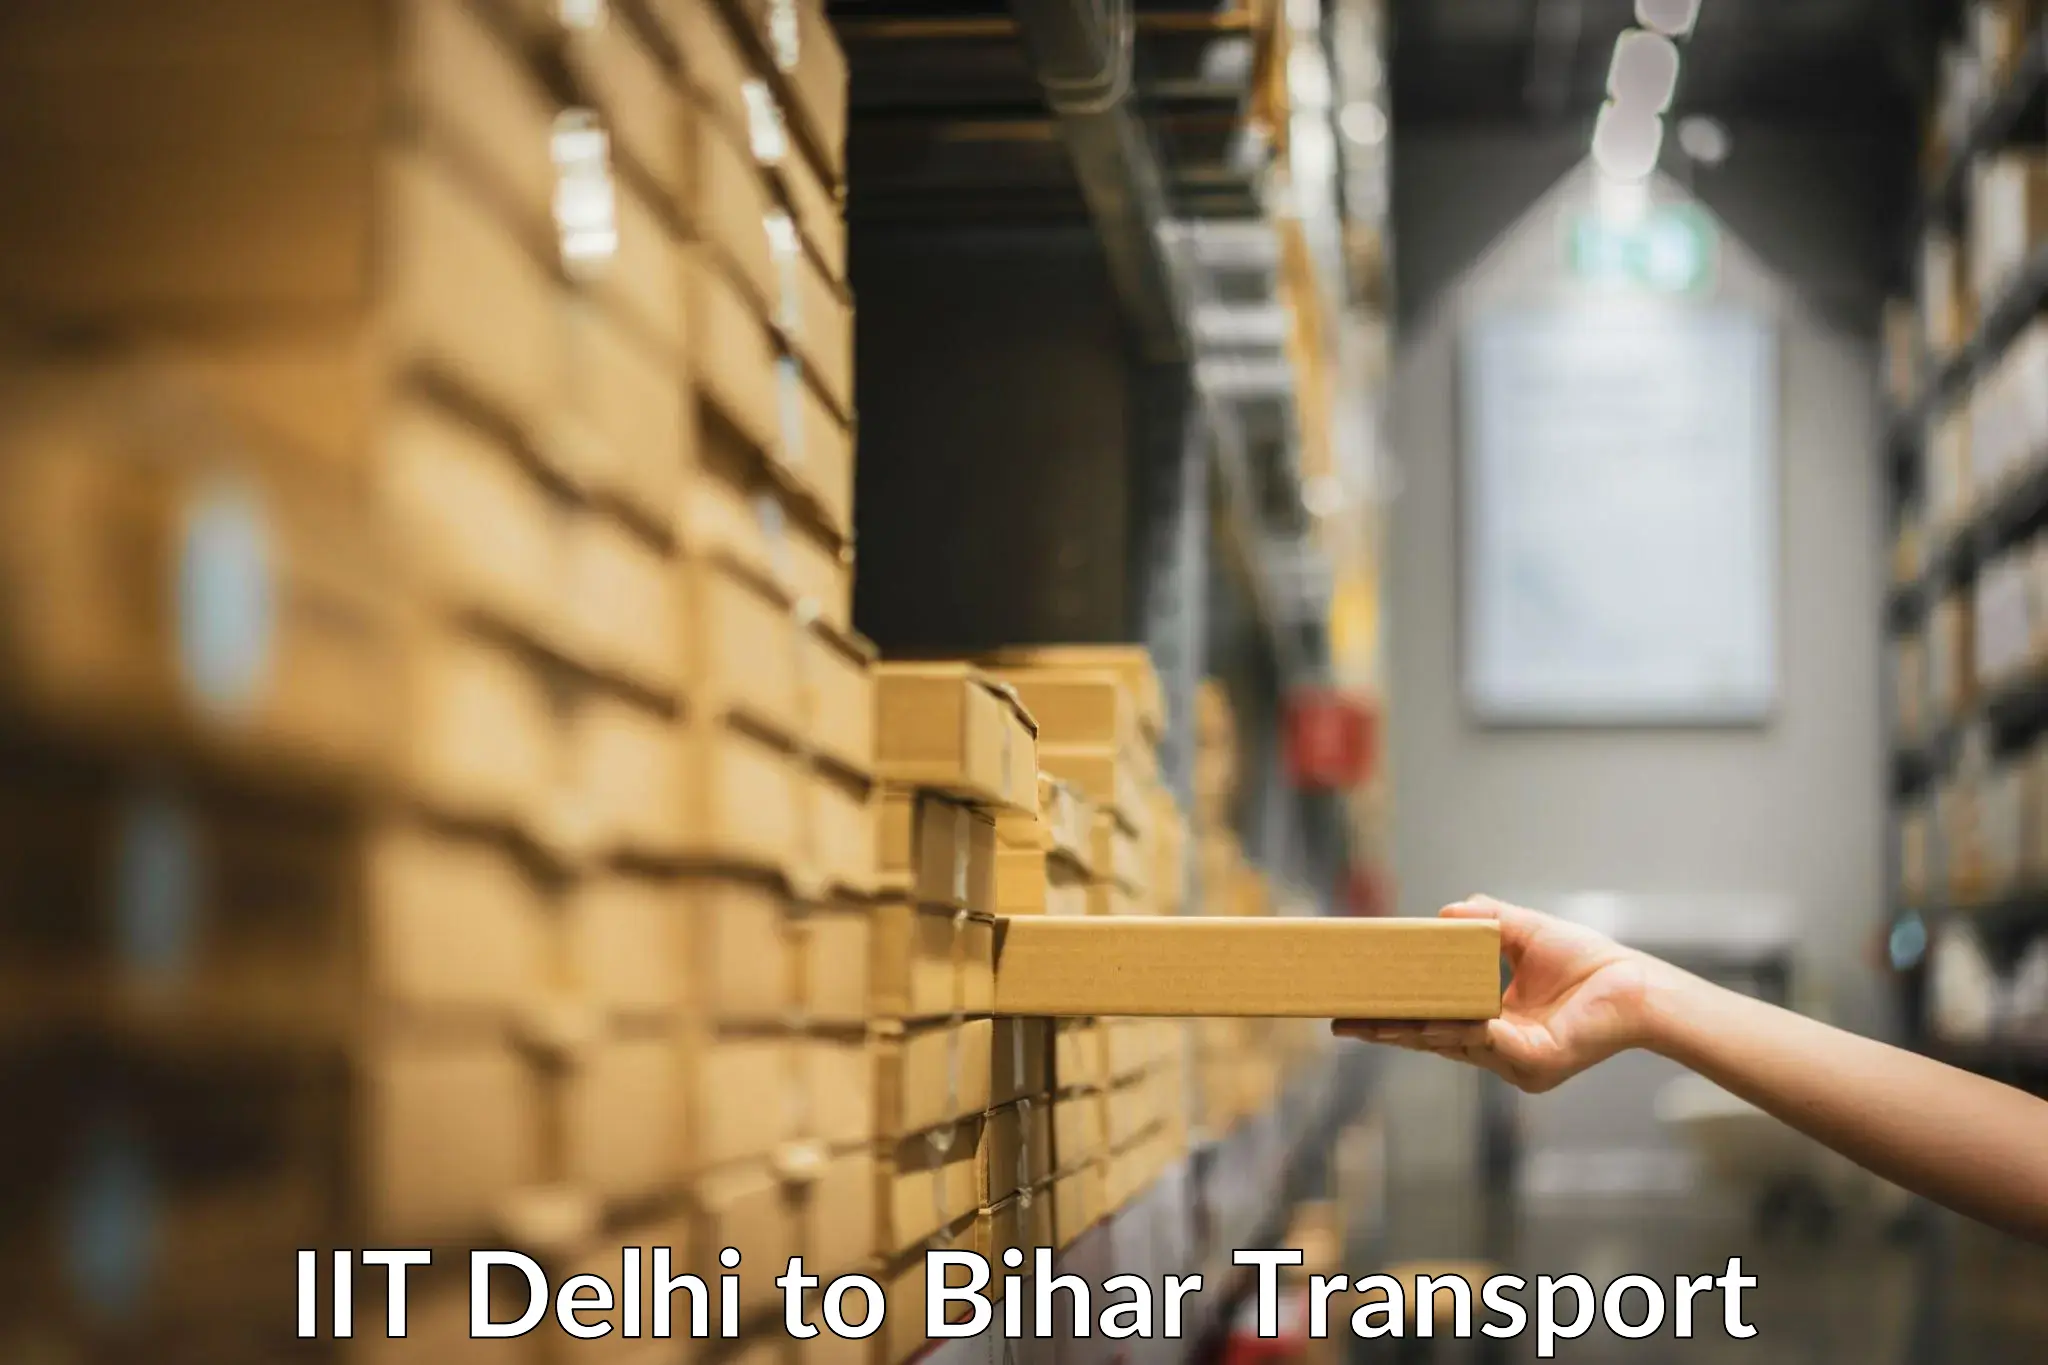 Bike shipping service IIT Delhi to Bakhtiarpur